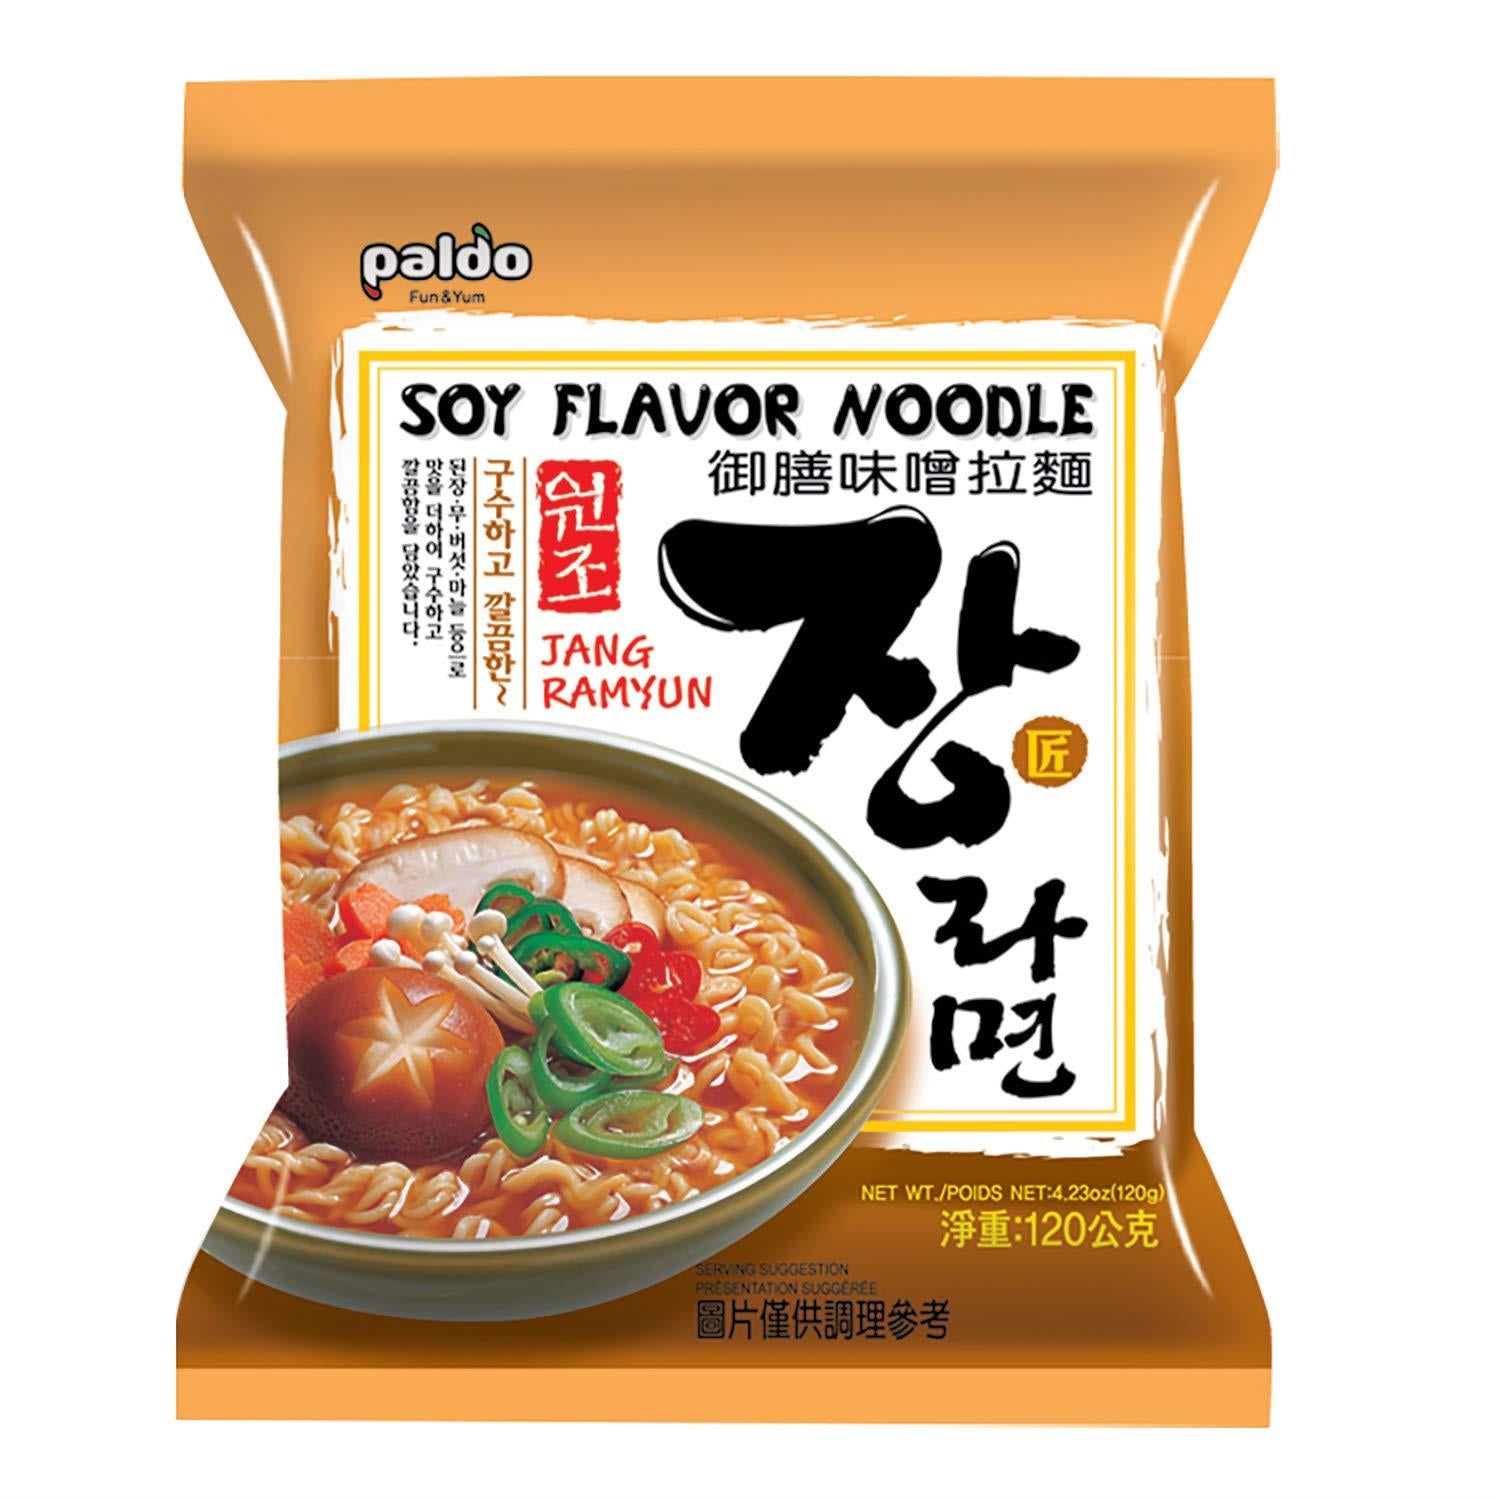 Paldo Fun & Yum Jang Ramen Mild Instant Noodles with Soup, Soy Flavored Broth, Savory Flavor Best Oriental Style Korean Ramyun, K-Food, 팔도 장라면 120g (4.23 oz) x 10 Pack